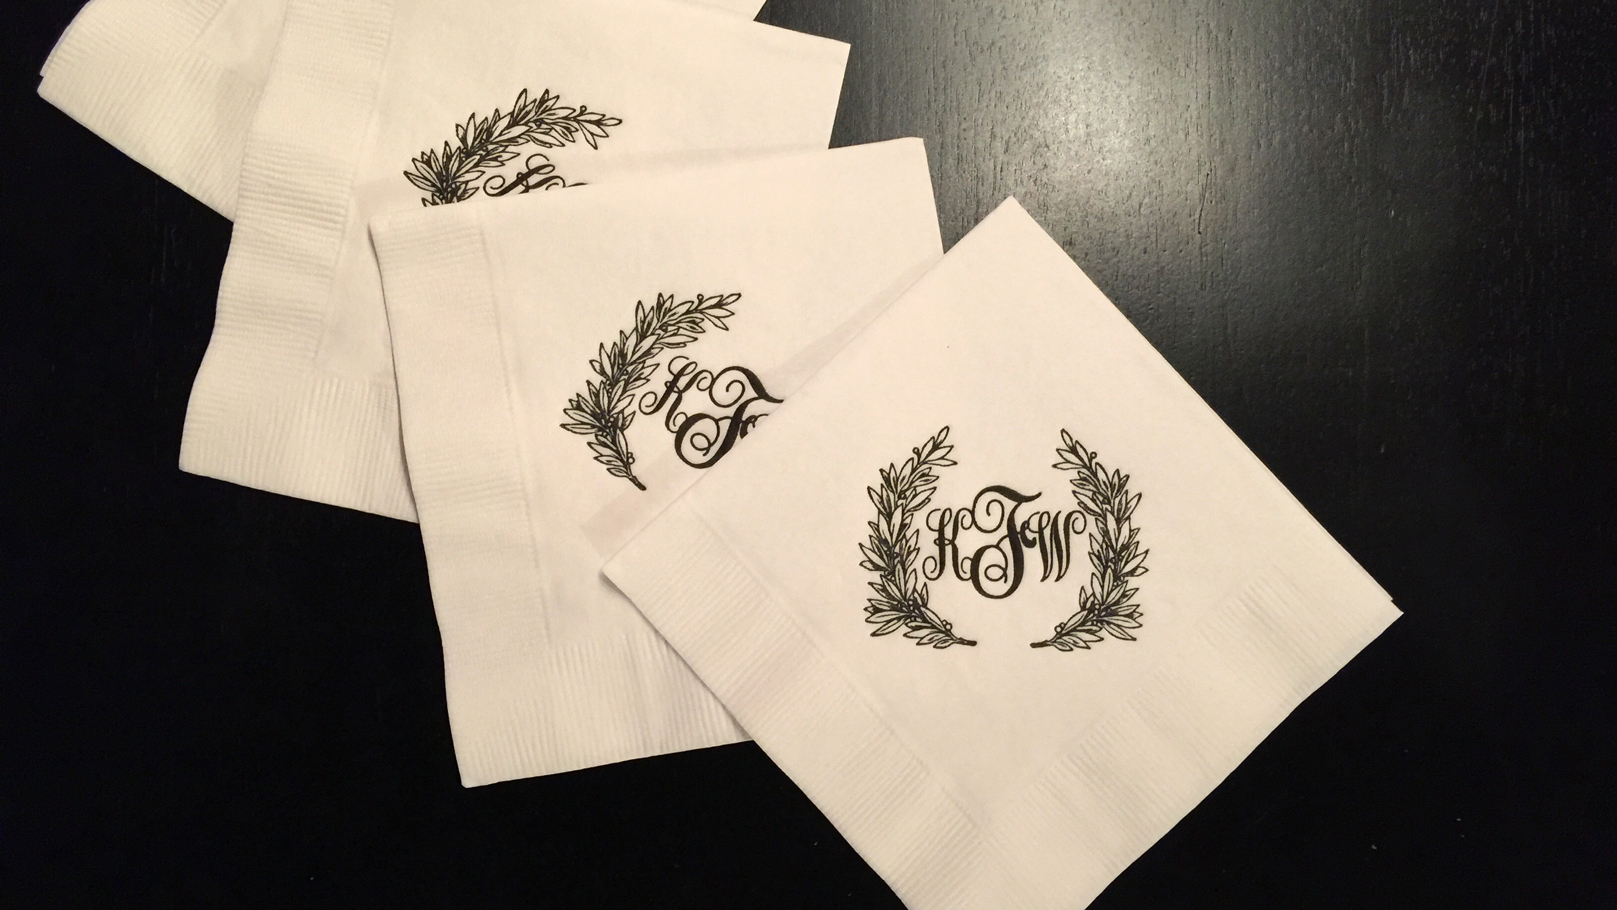 fingerprint design's closeup photo of Katie's custom illustrated wedding napkins